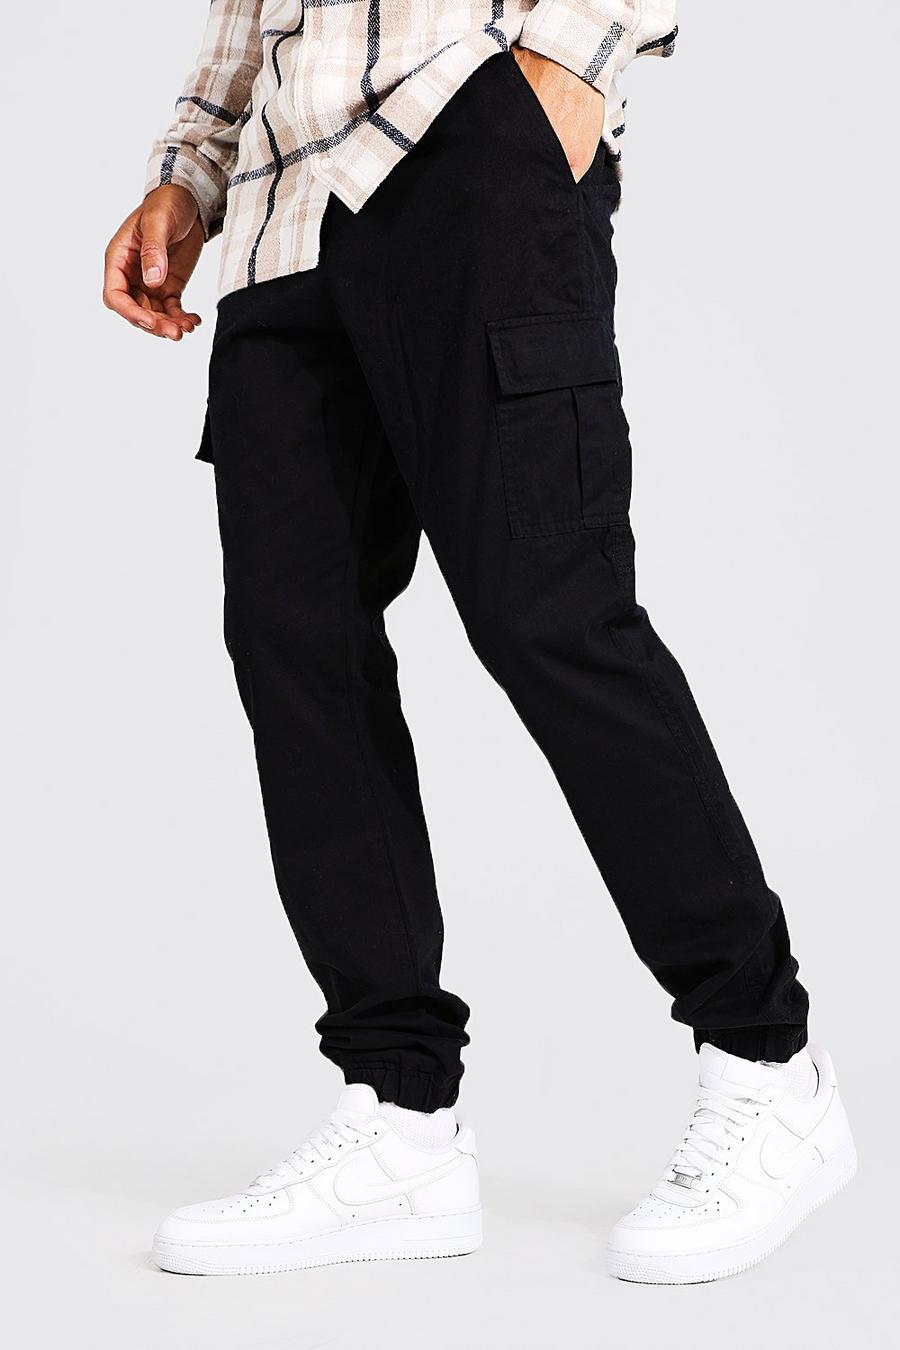 Black negro מכנסי דגמ"ח בגזרה רגילה, לגברים גבוהים image number 1